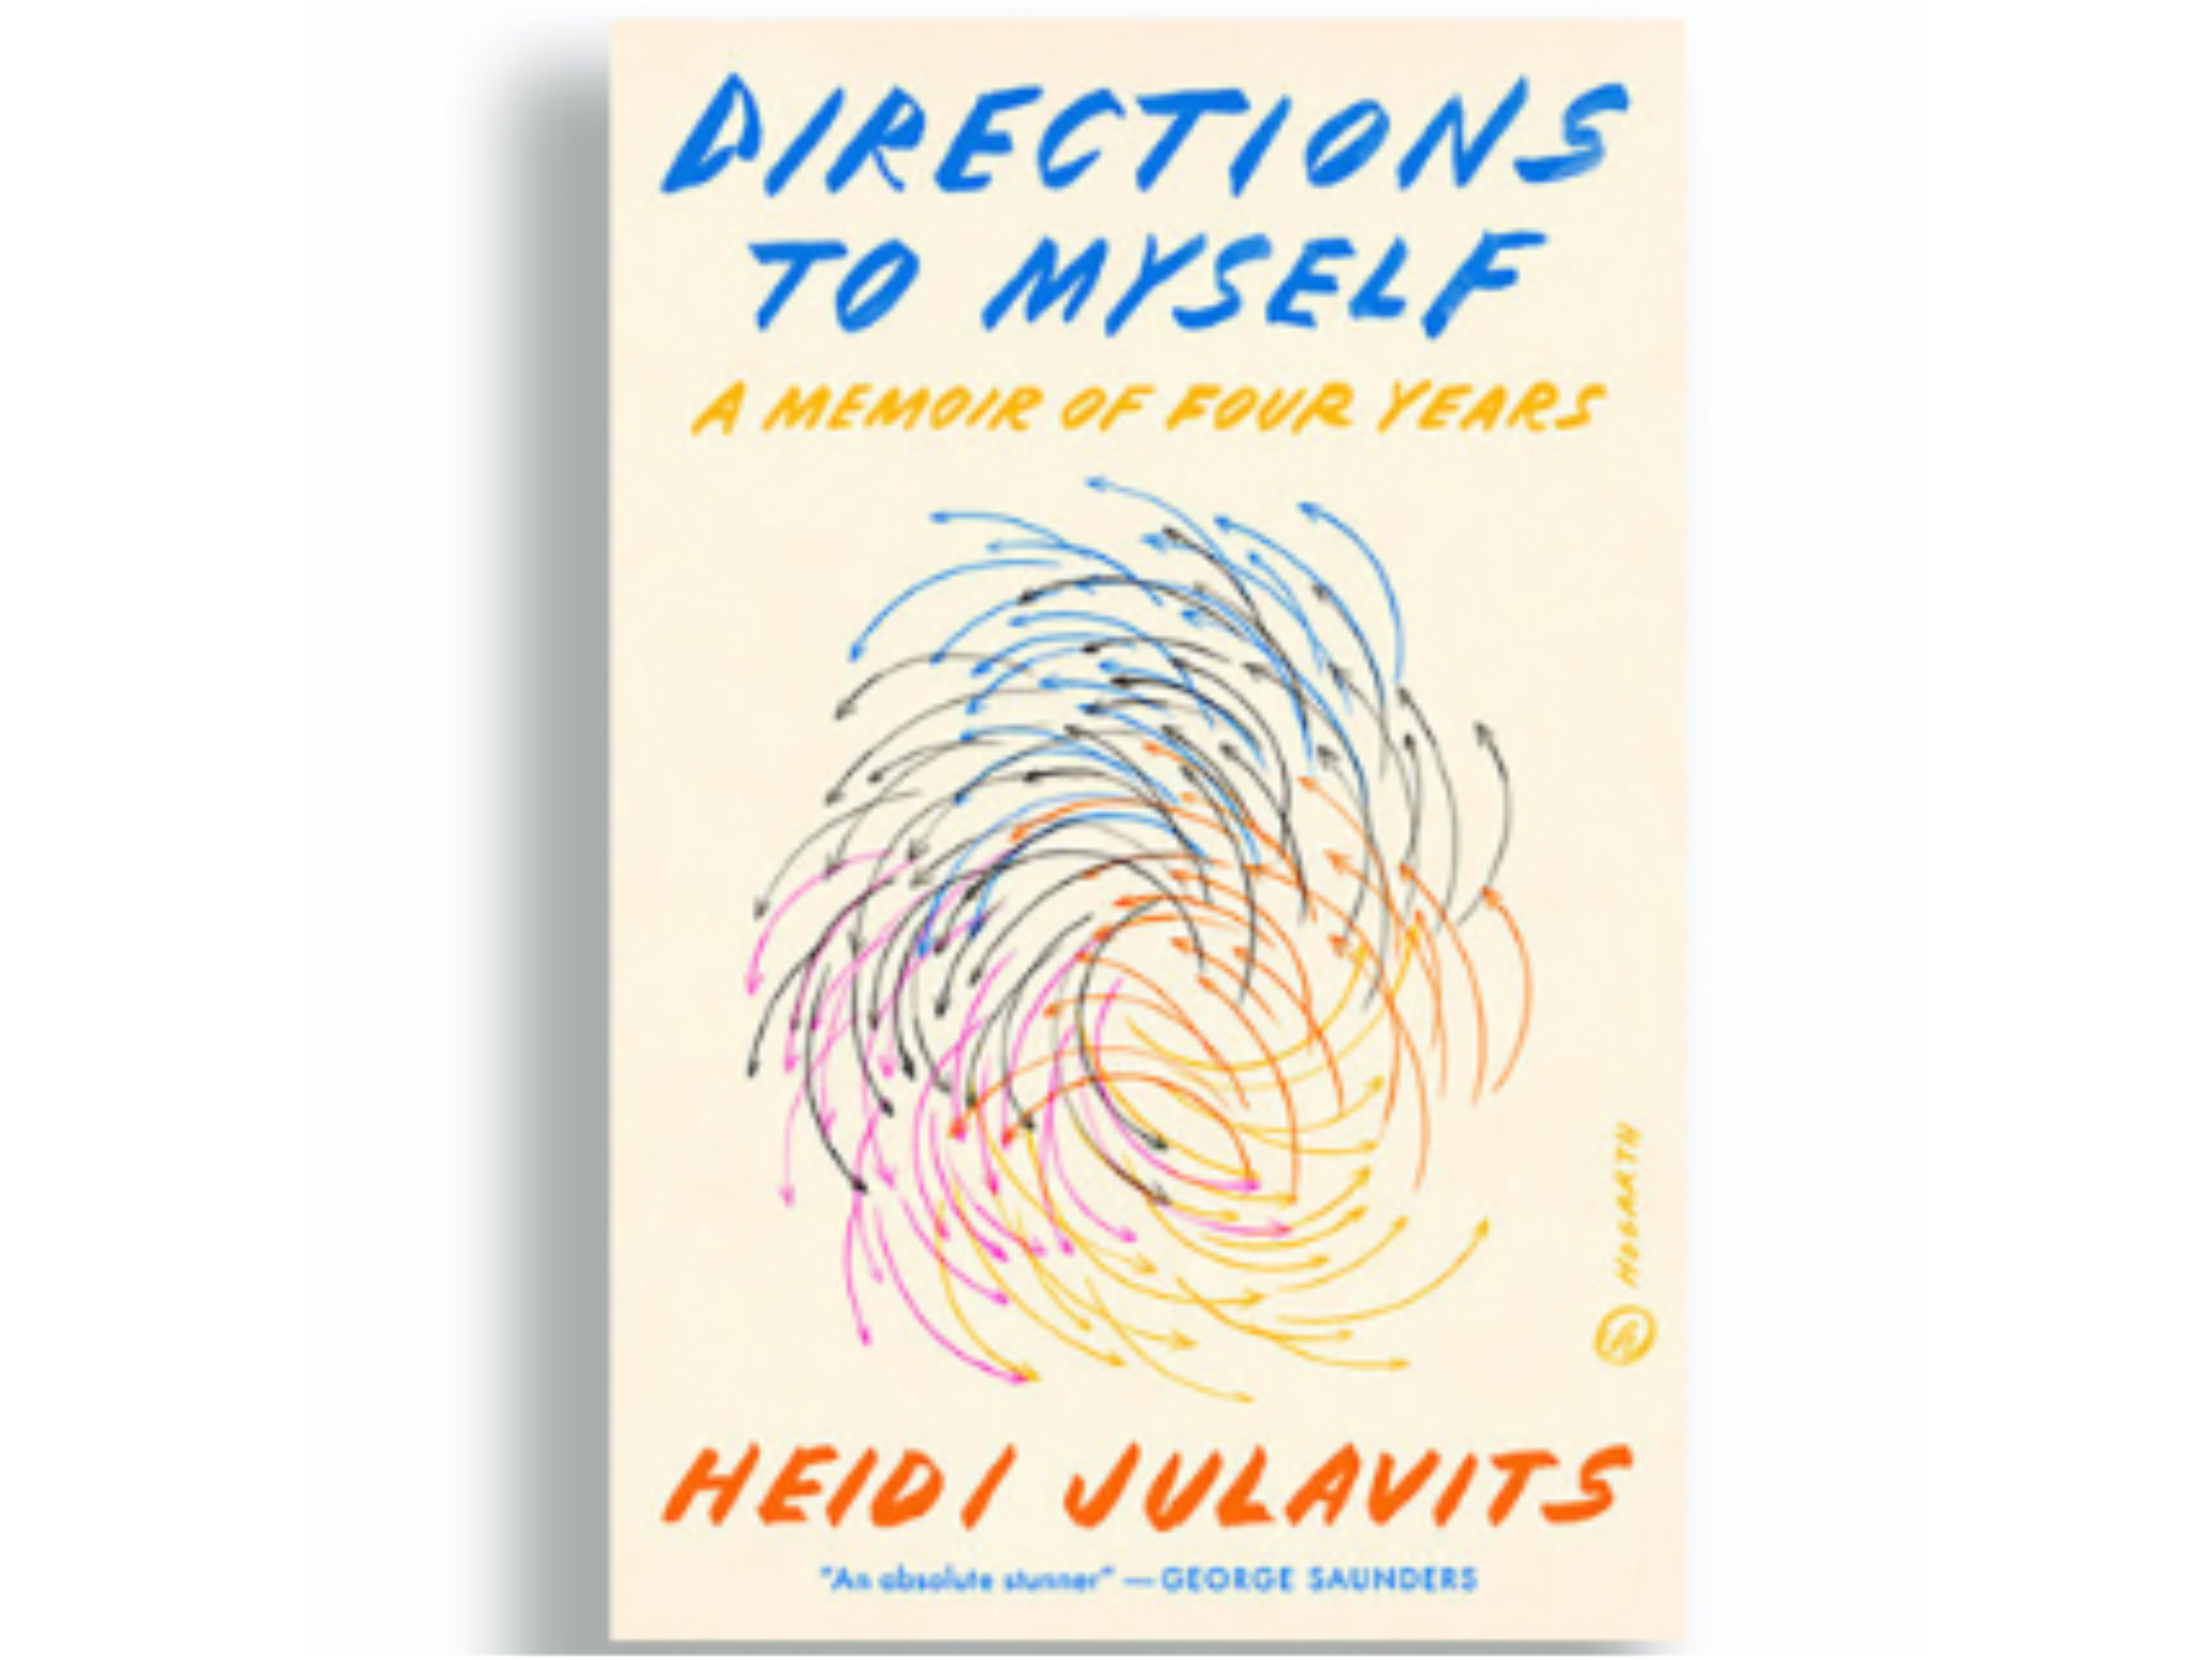 Heidi Julavits: Directions to Myself